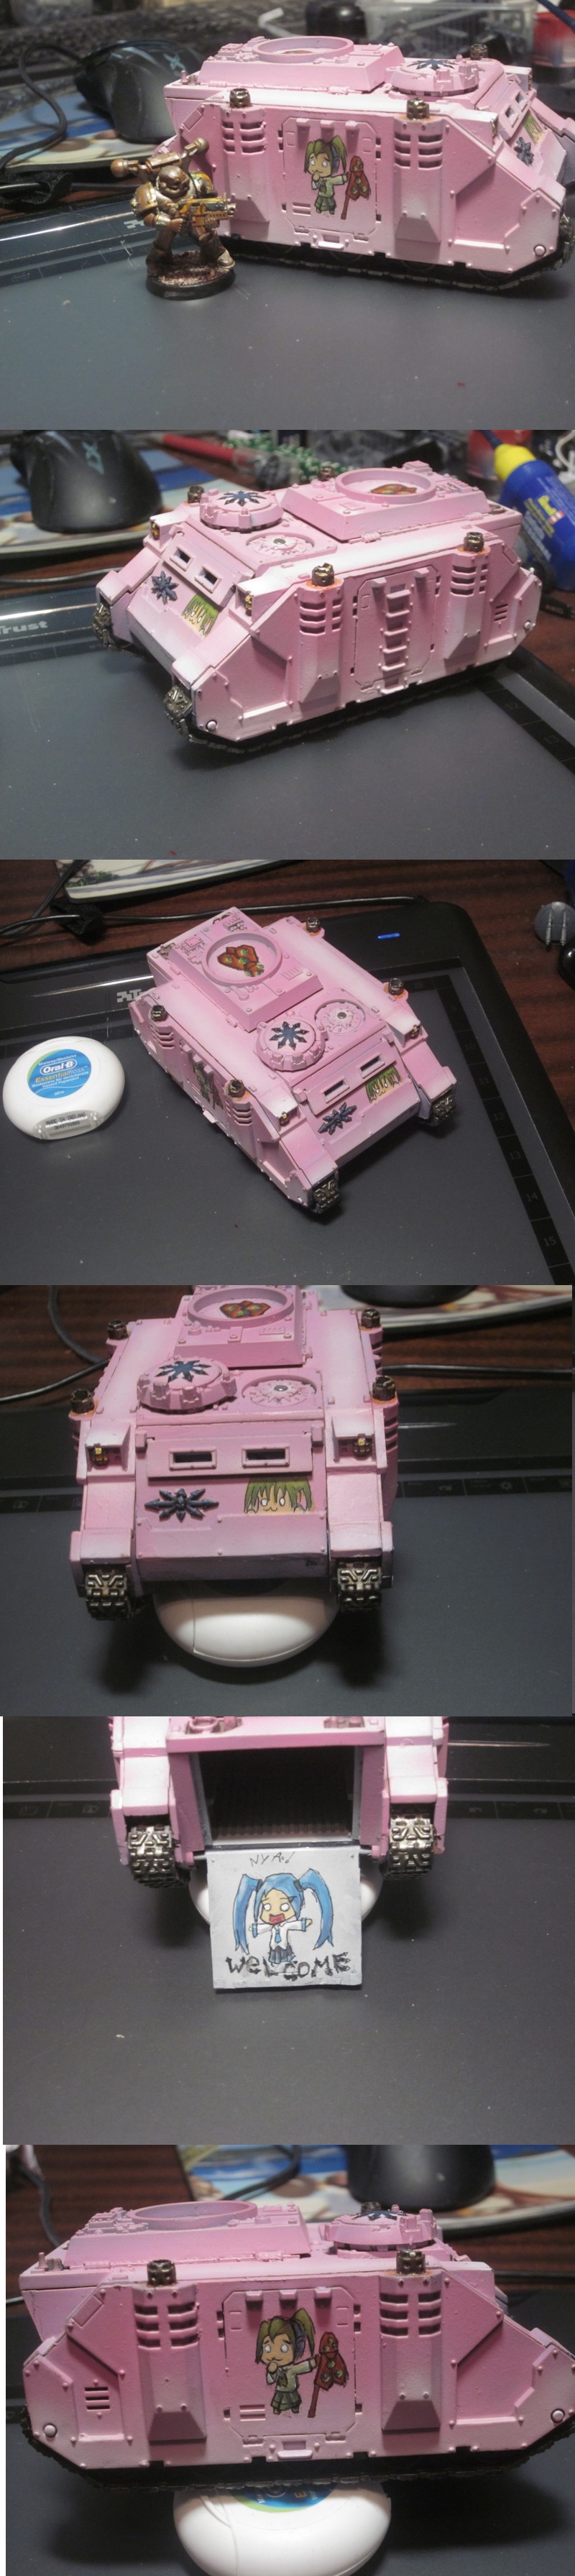 The pink rhino of doom